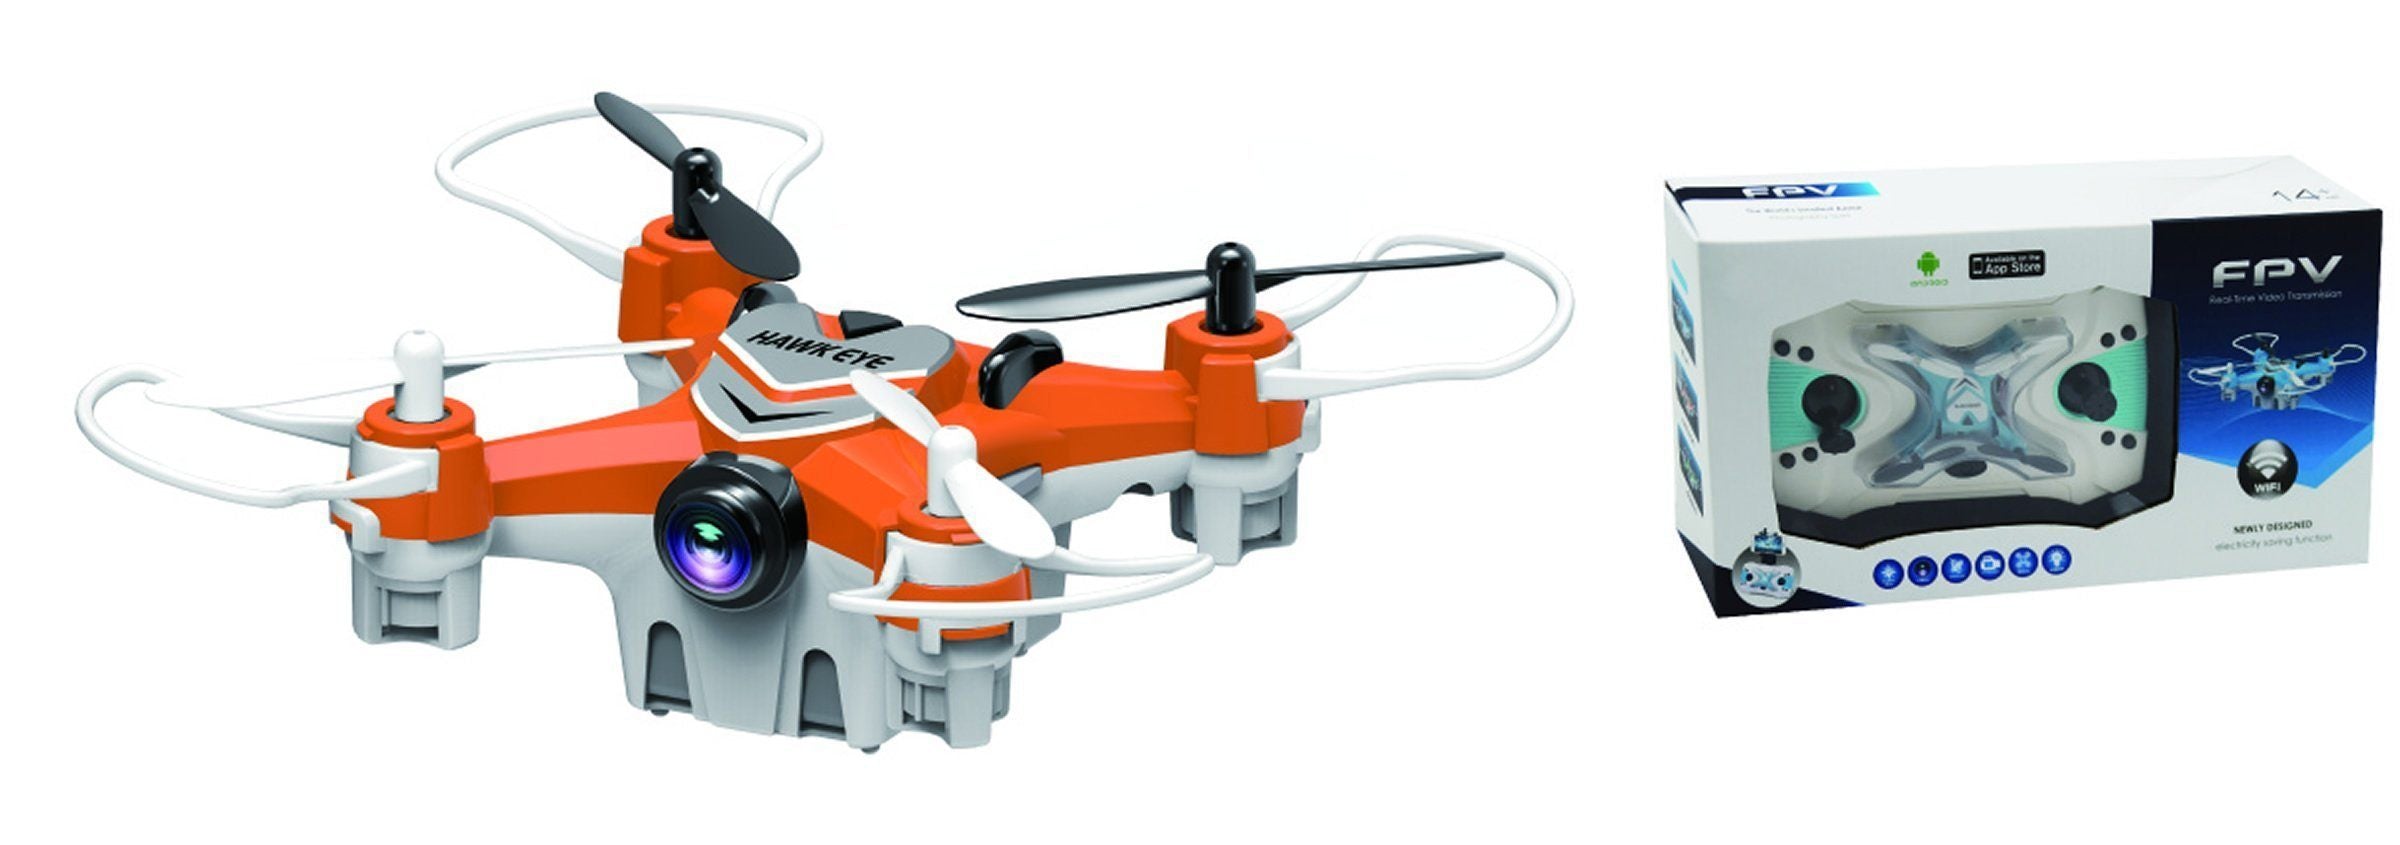 2" Nano Drone - Fly The Bug!